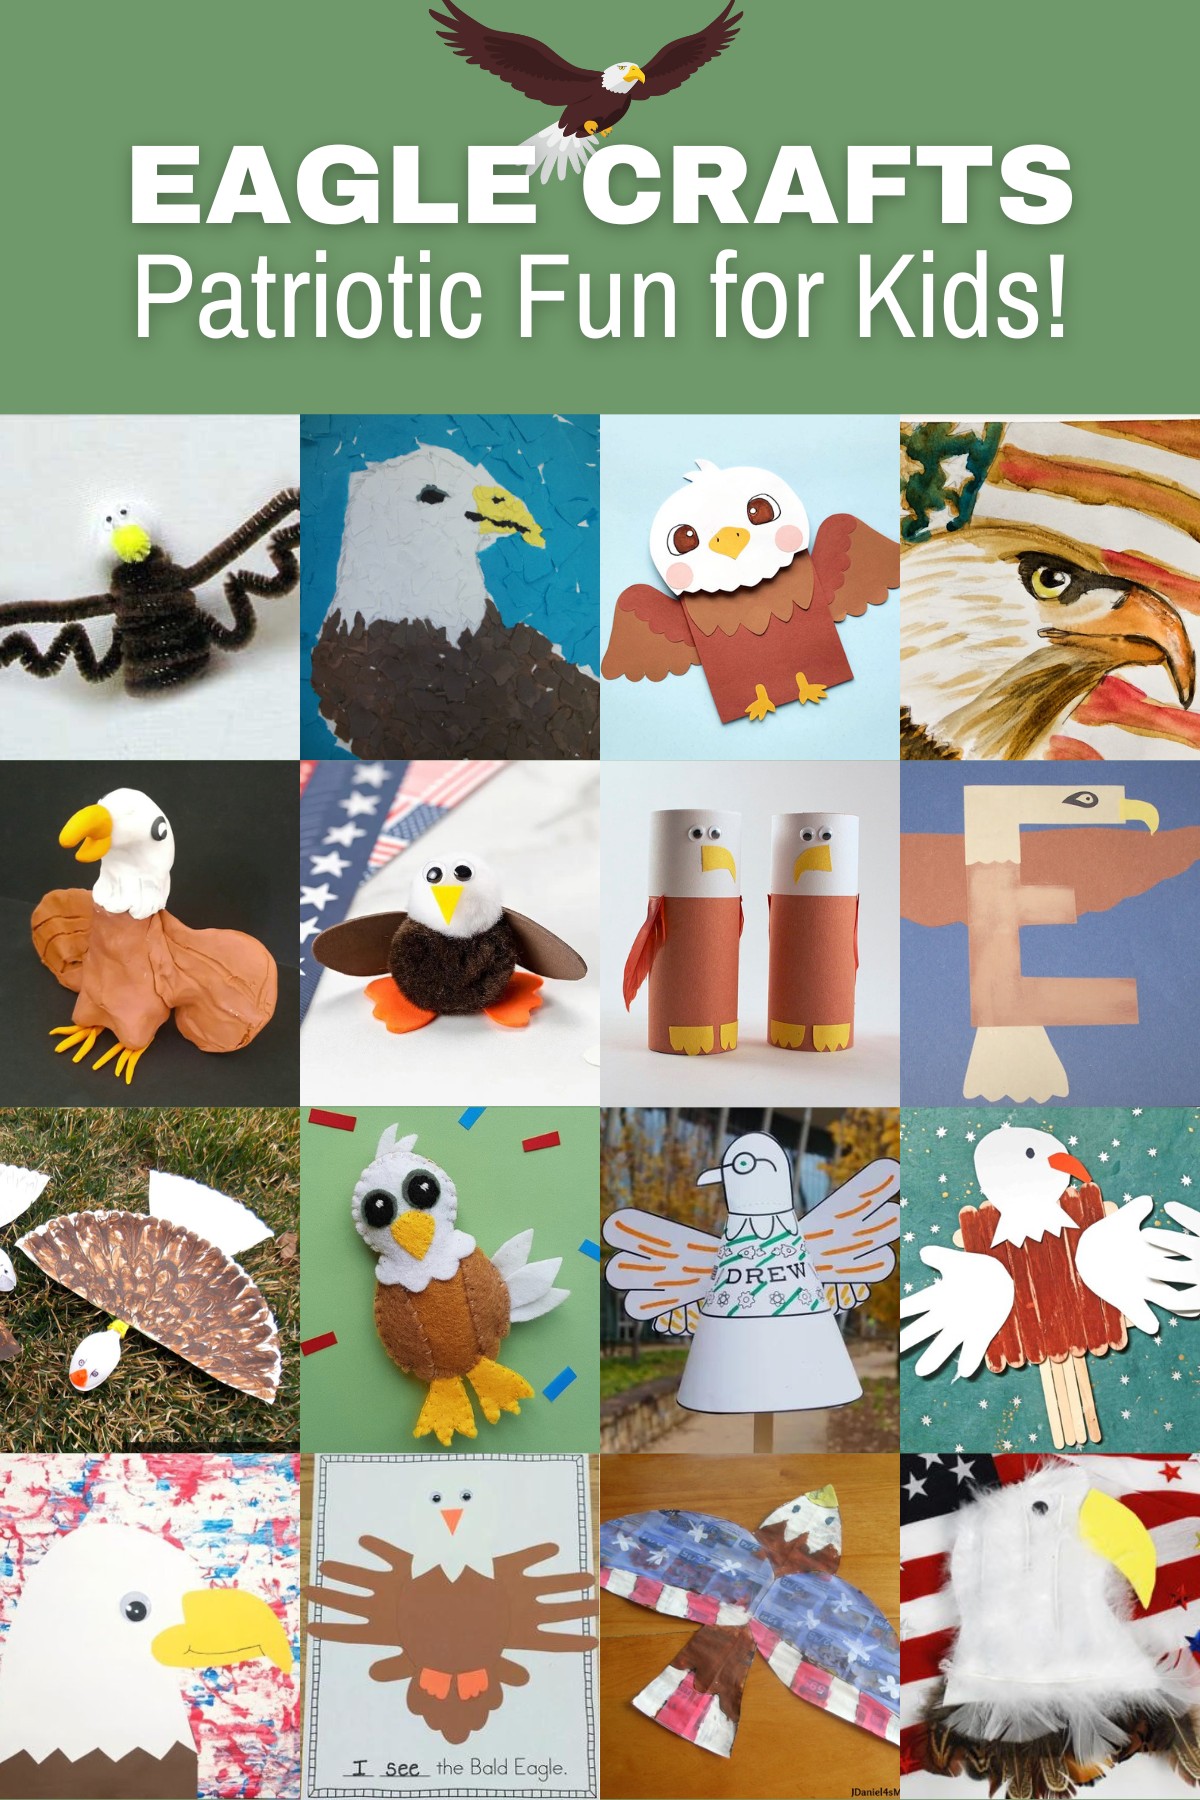 Eagle Crafts: Patriotic Fun for Kids!